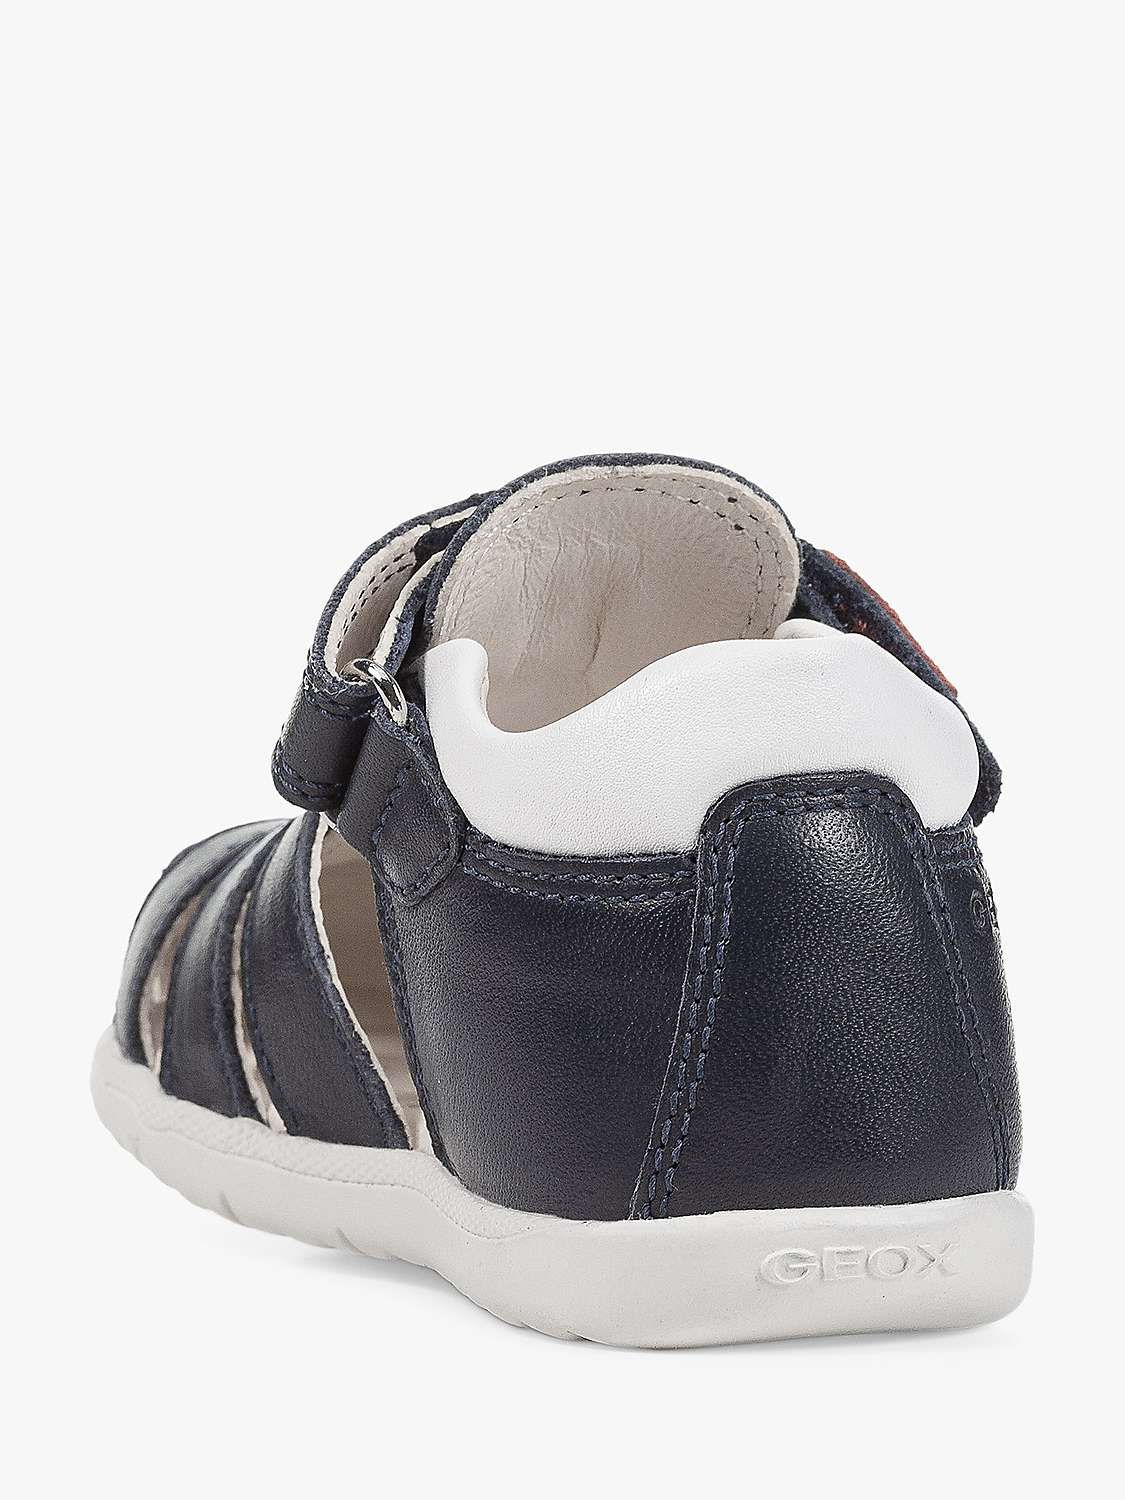 Buy Geox Kids' Macchia Leather Blend Pre-Walker Sandals Online at johnlewis.com